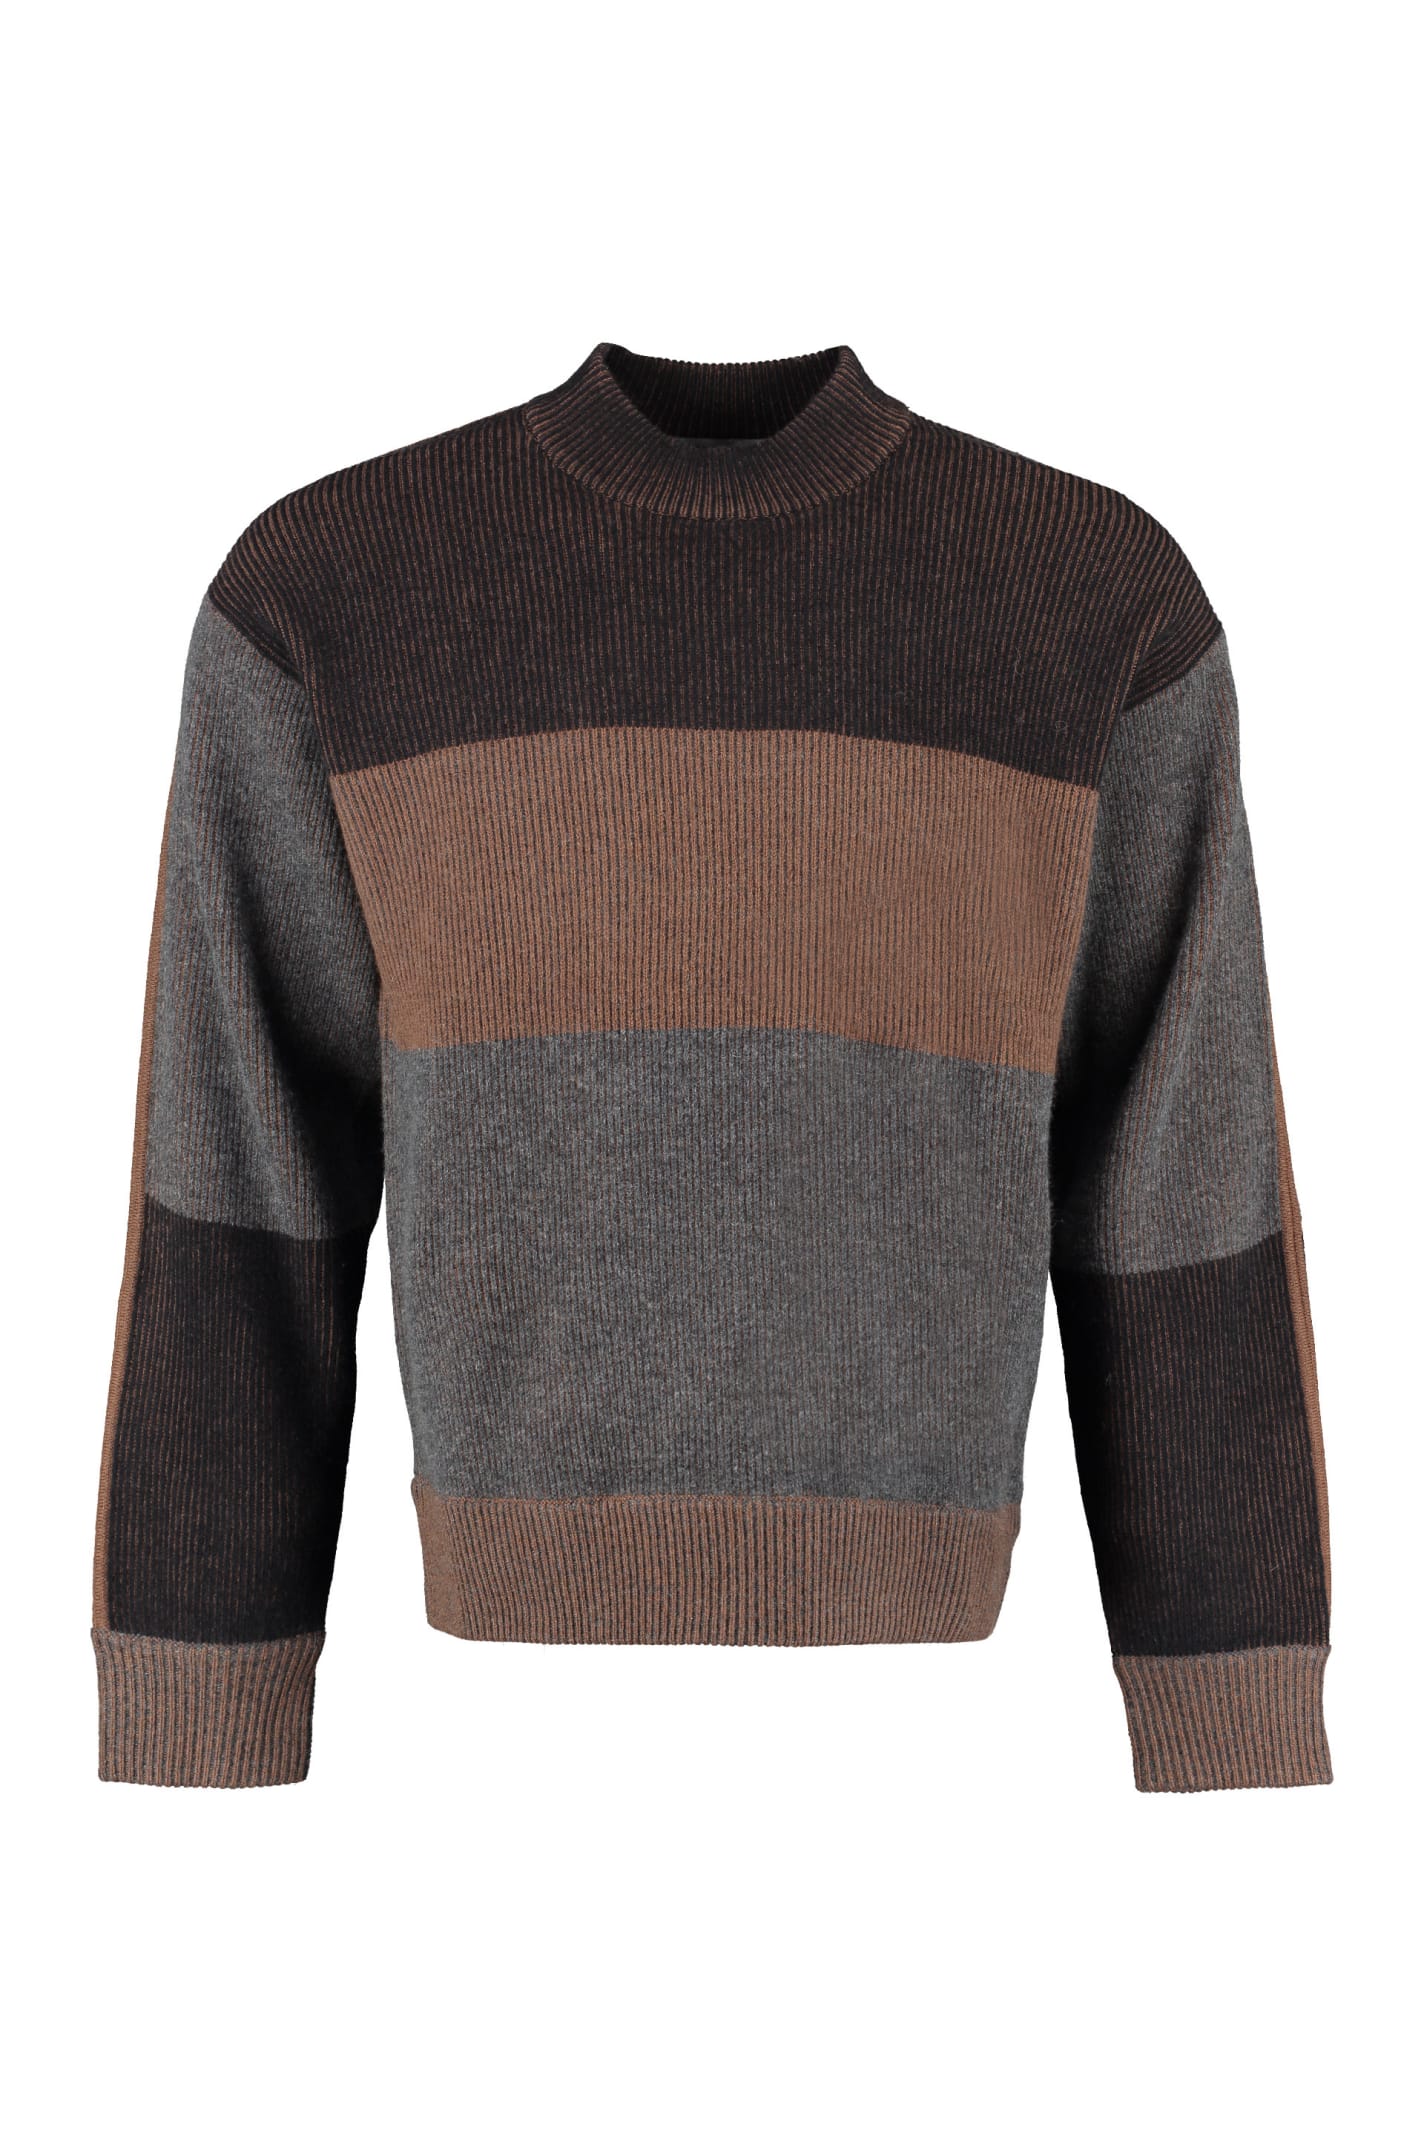 Z Zegna Wool-blend Crew-neck Sweater